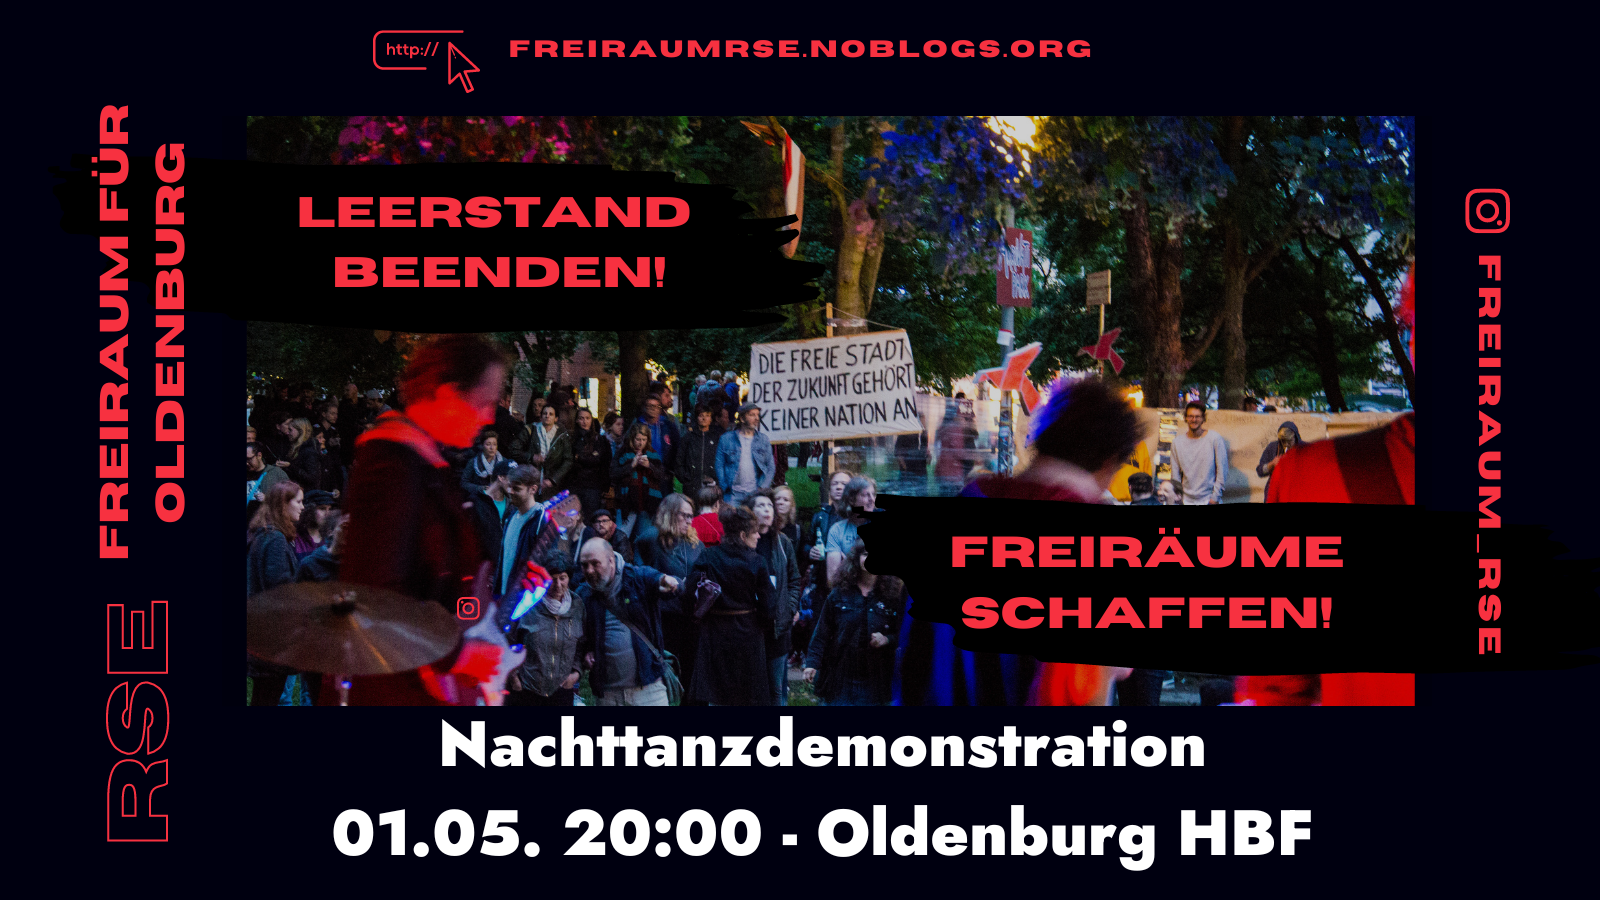 Nachttanzdemonstration 01.05. 20 Uhr Oldenburg HBF